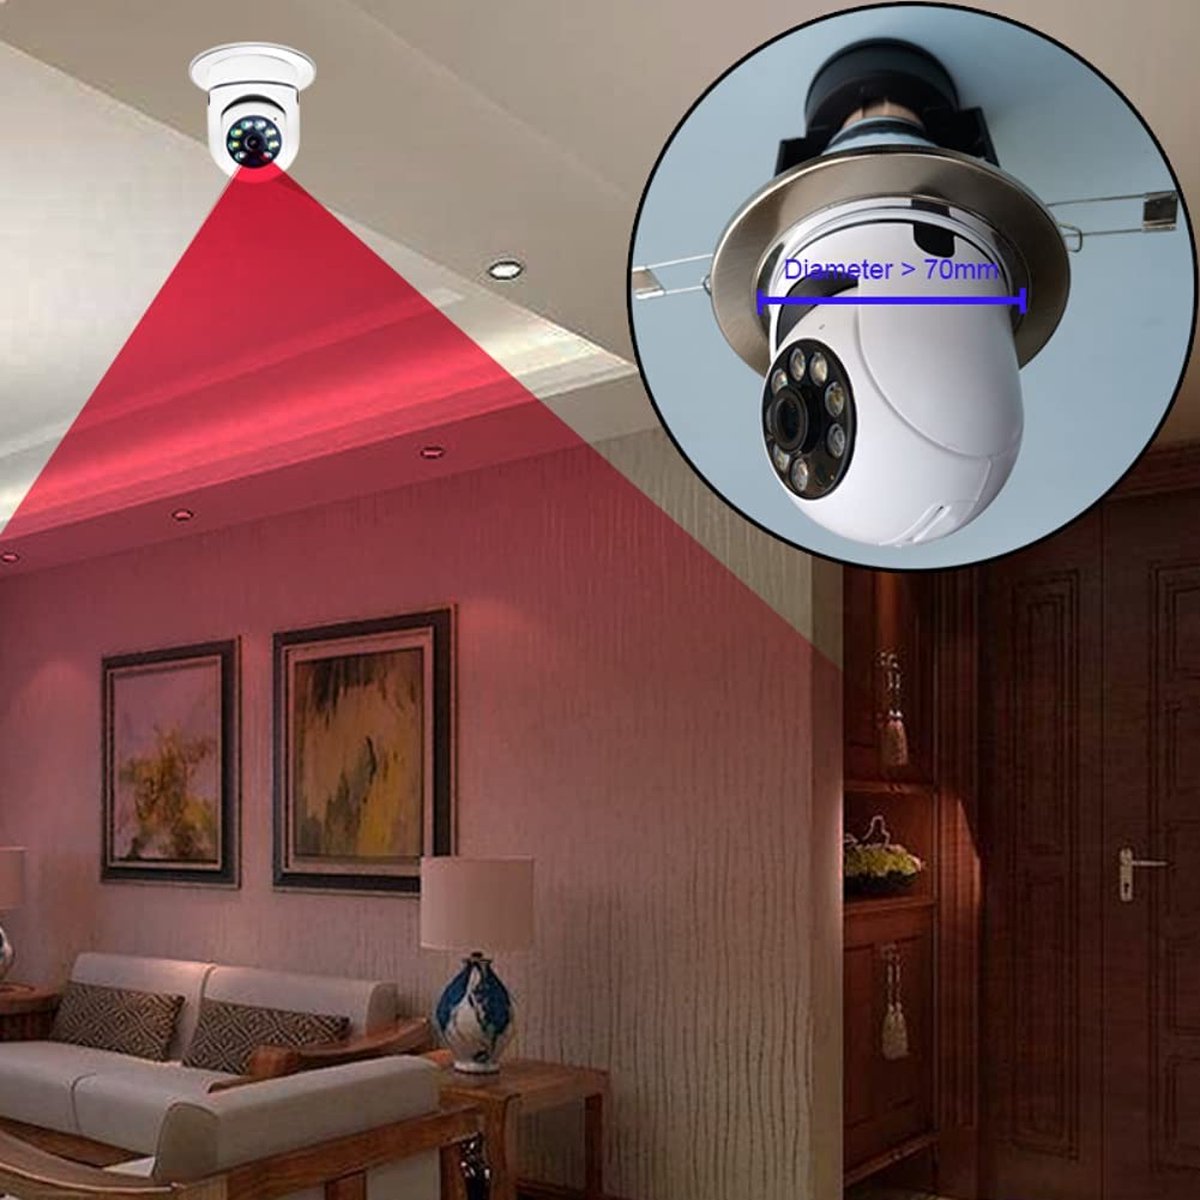 Megatopper -  E27 Lamp Camera - Wifi 5G - 1080P Draadloze PTZ Beveiligingscamera met E27 Lamp  - 360 graden Panoramisch - Motion Auto Tracking - Nachtzicht - Tweeweg Audio